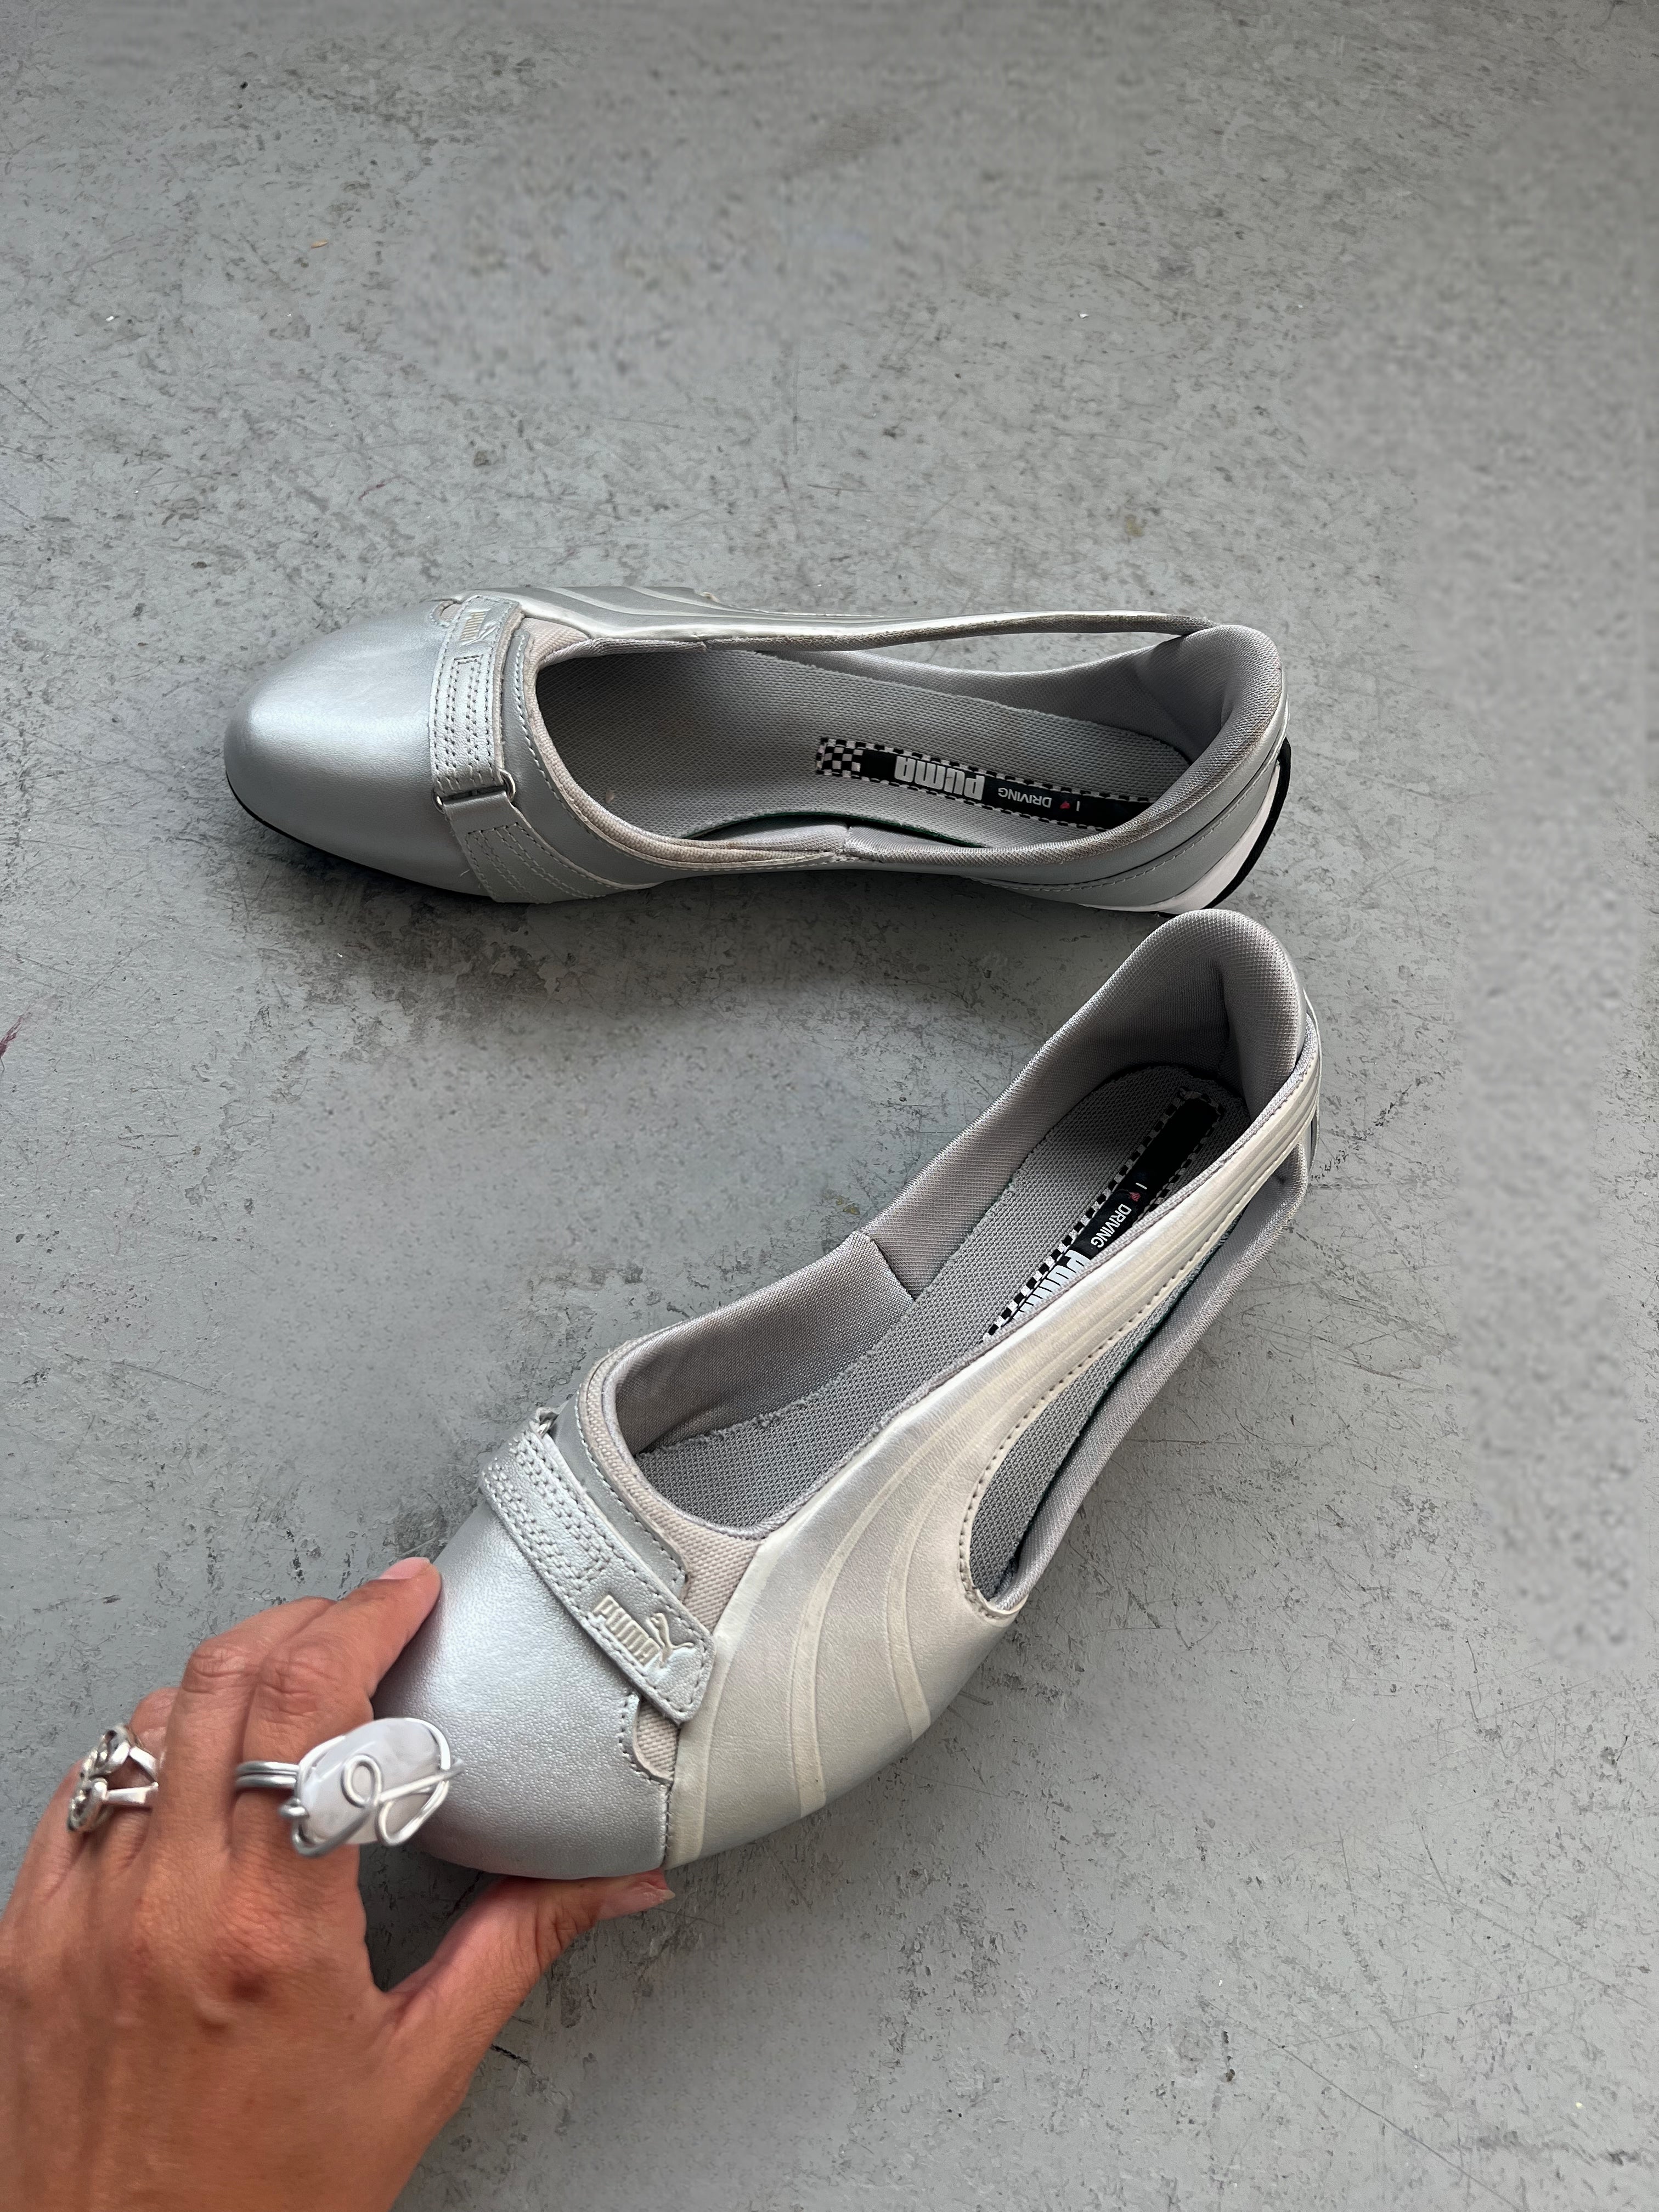 Silver Puma Ballet Flats Size 8/8.5